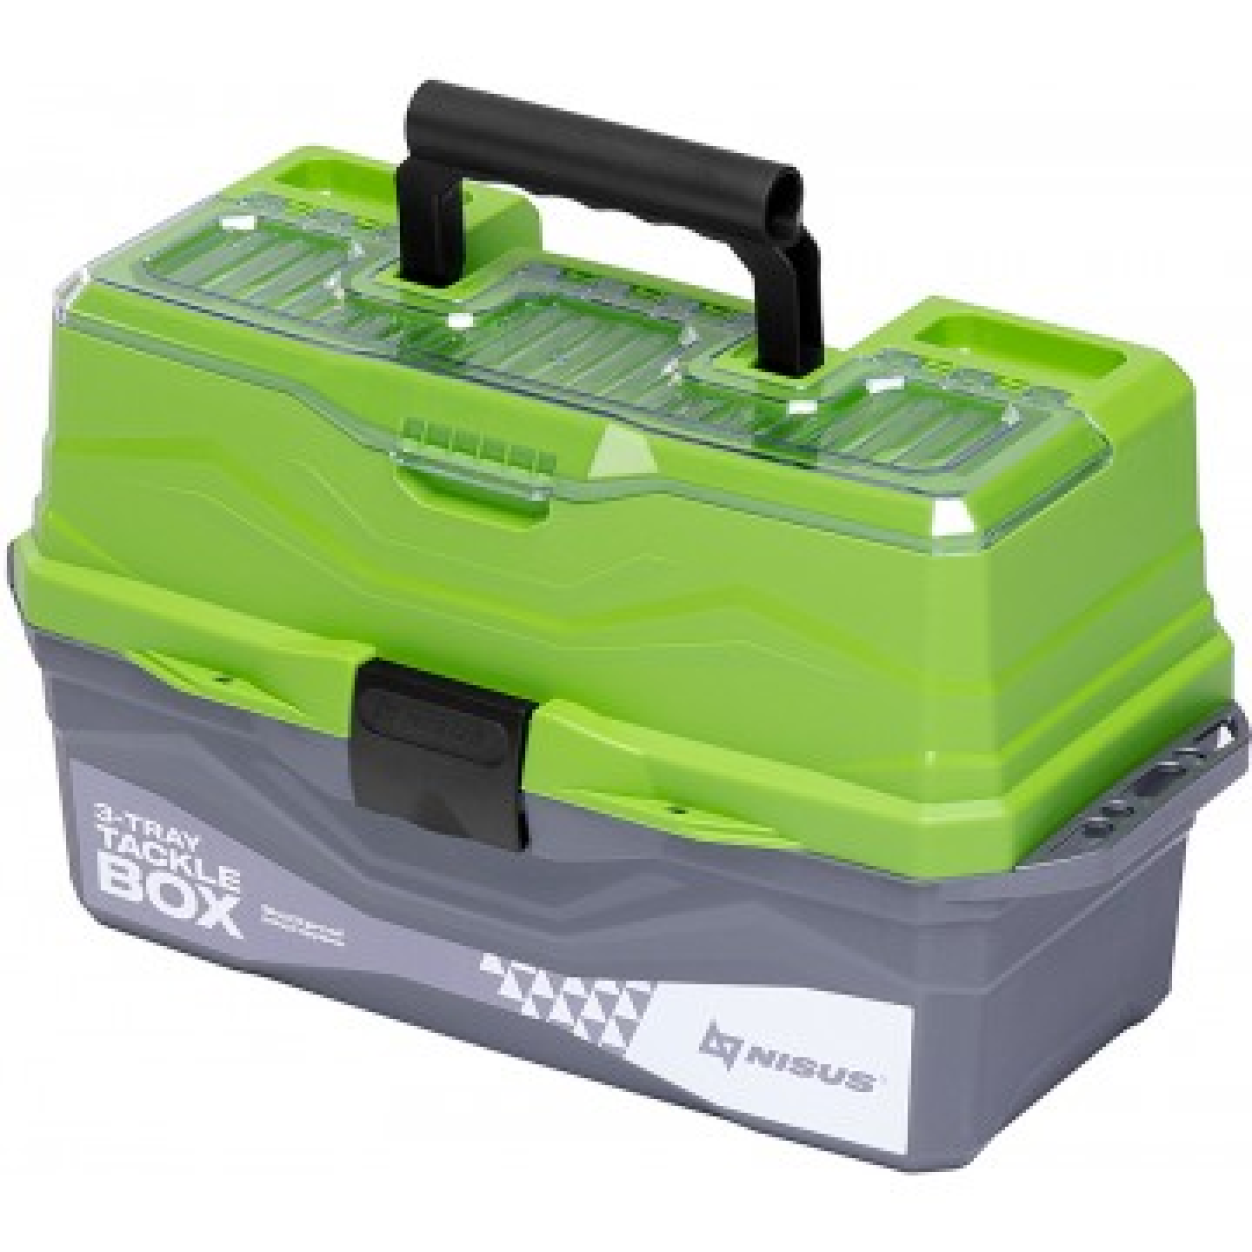 Ящик для снастей Tackle Box трехполочный nisus зеленый (n-TB-3-G)